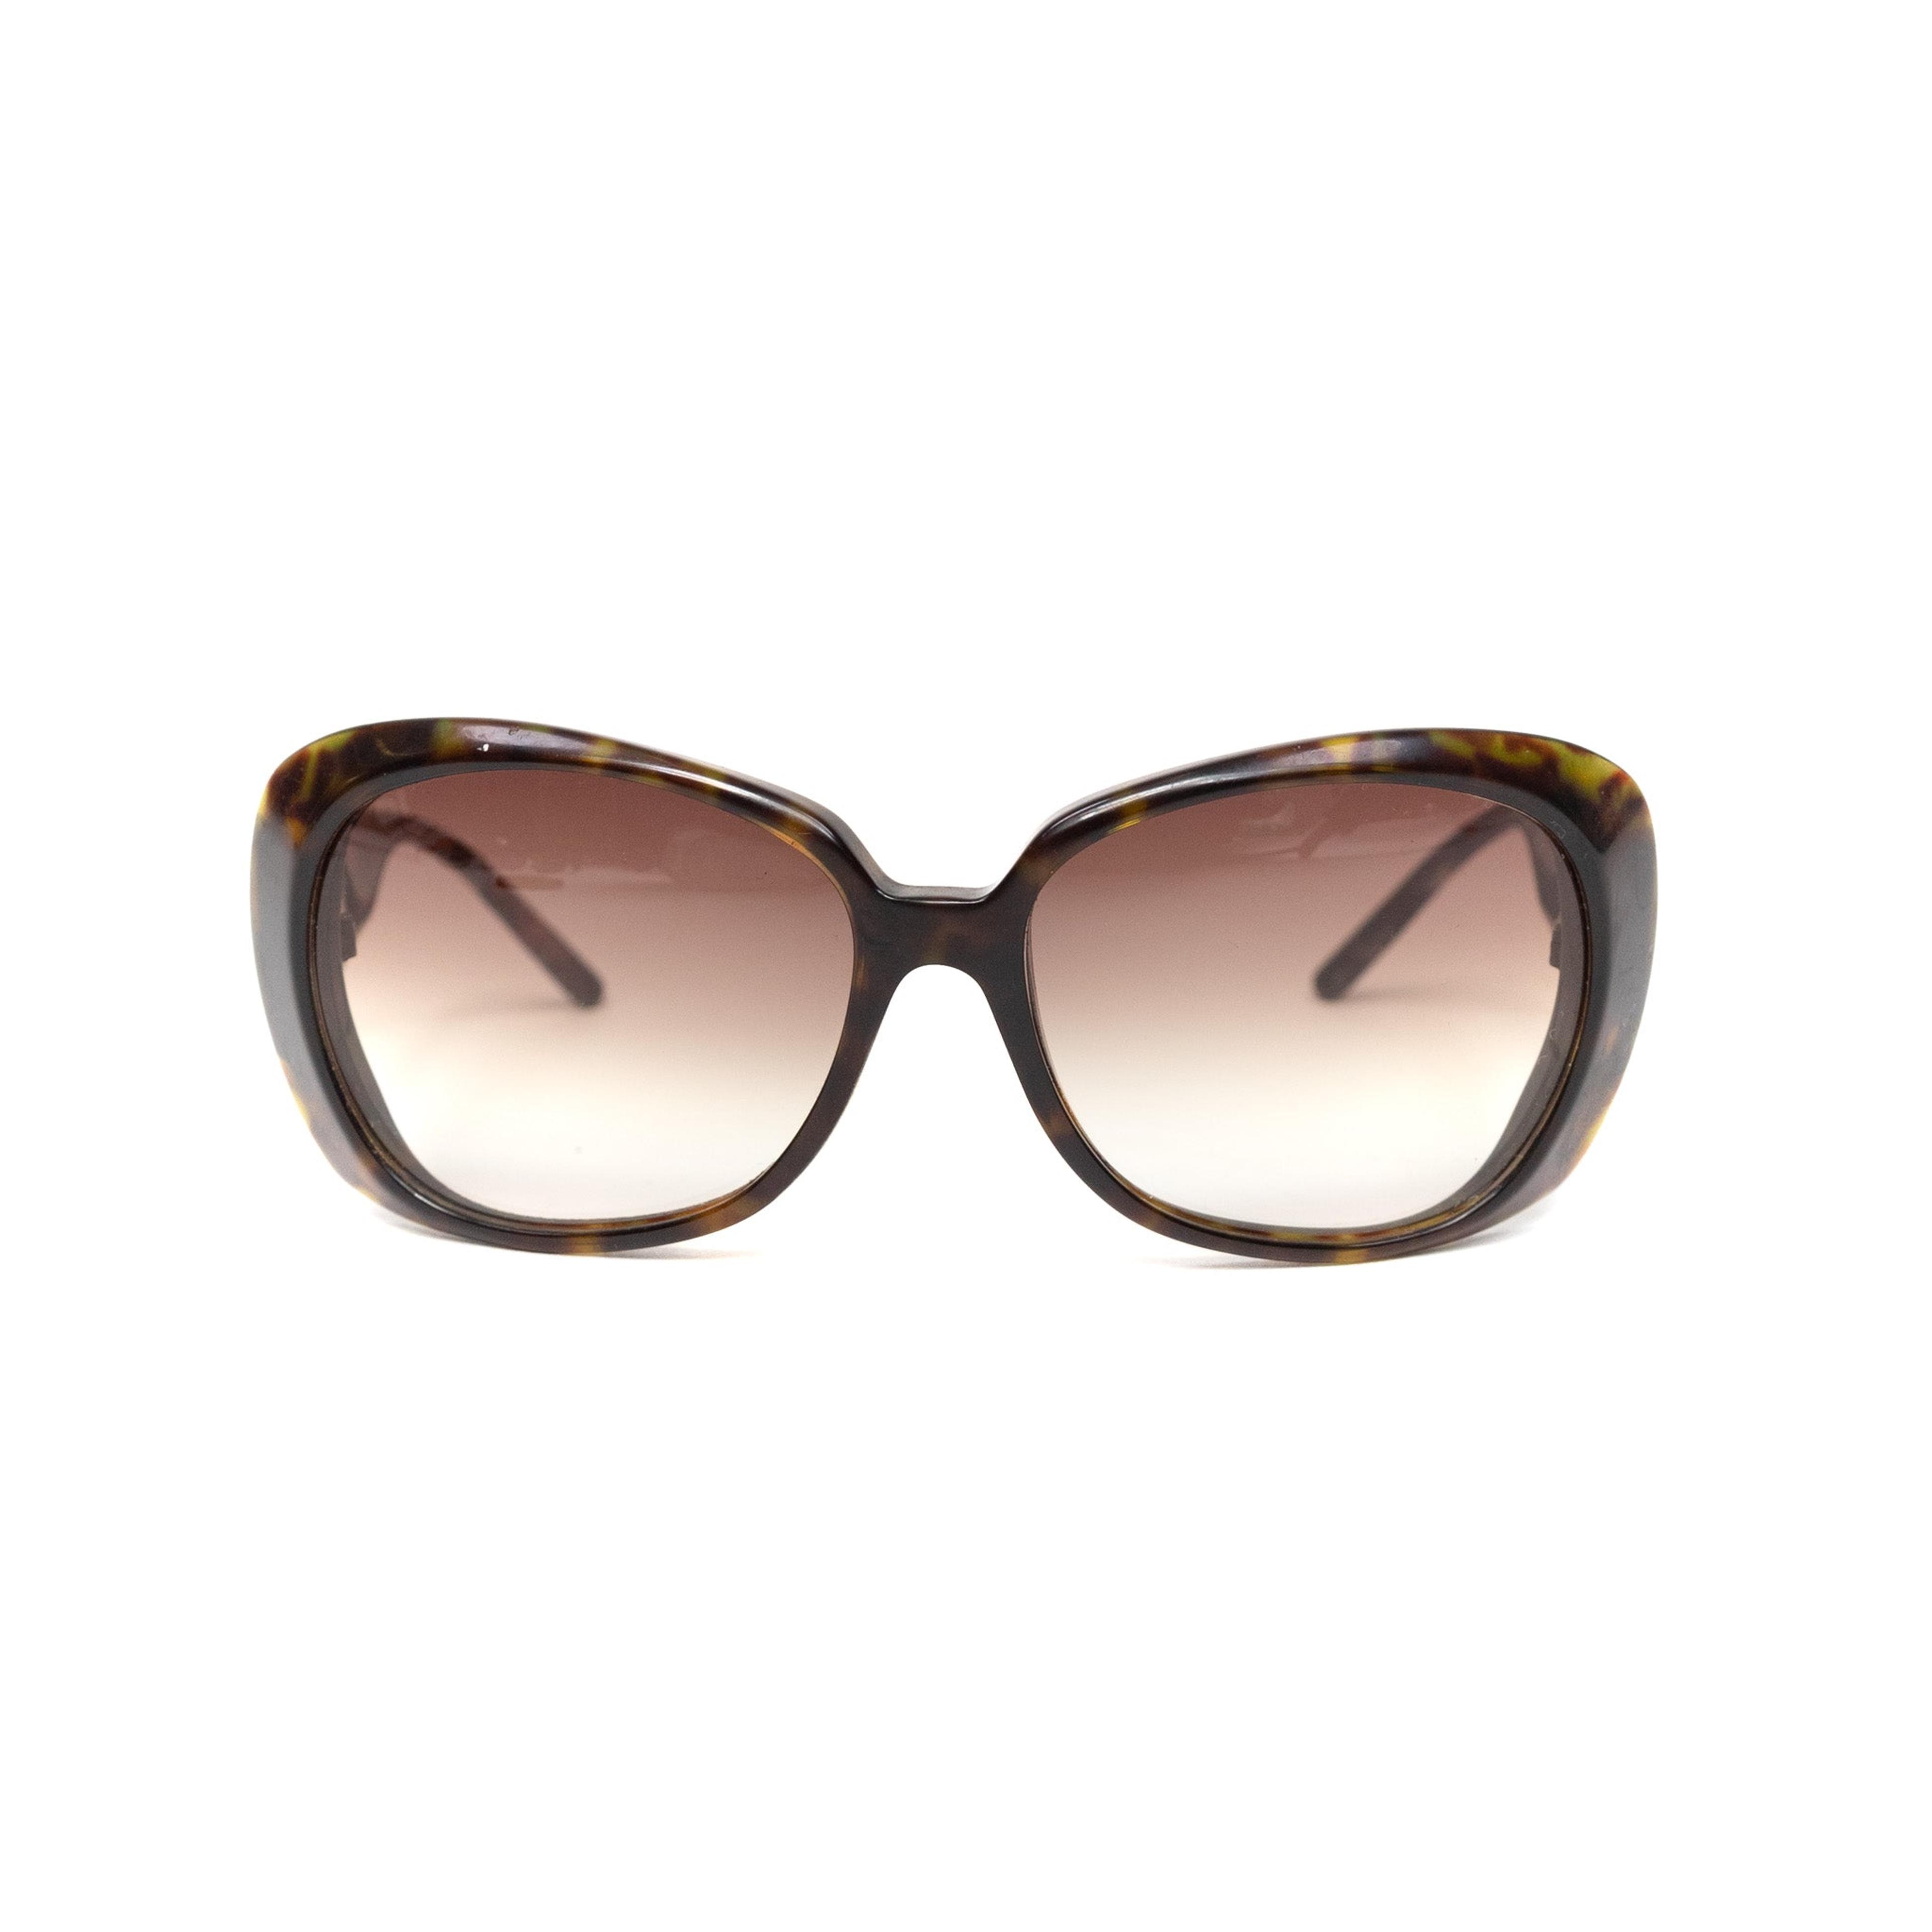 Alternate View 1 of Yves Saint Laurent Leopard Round Sunglasses